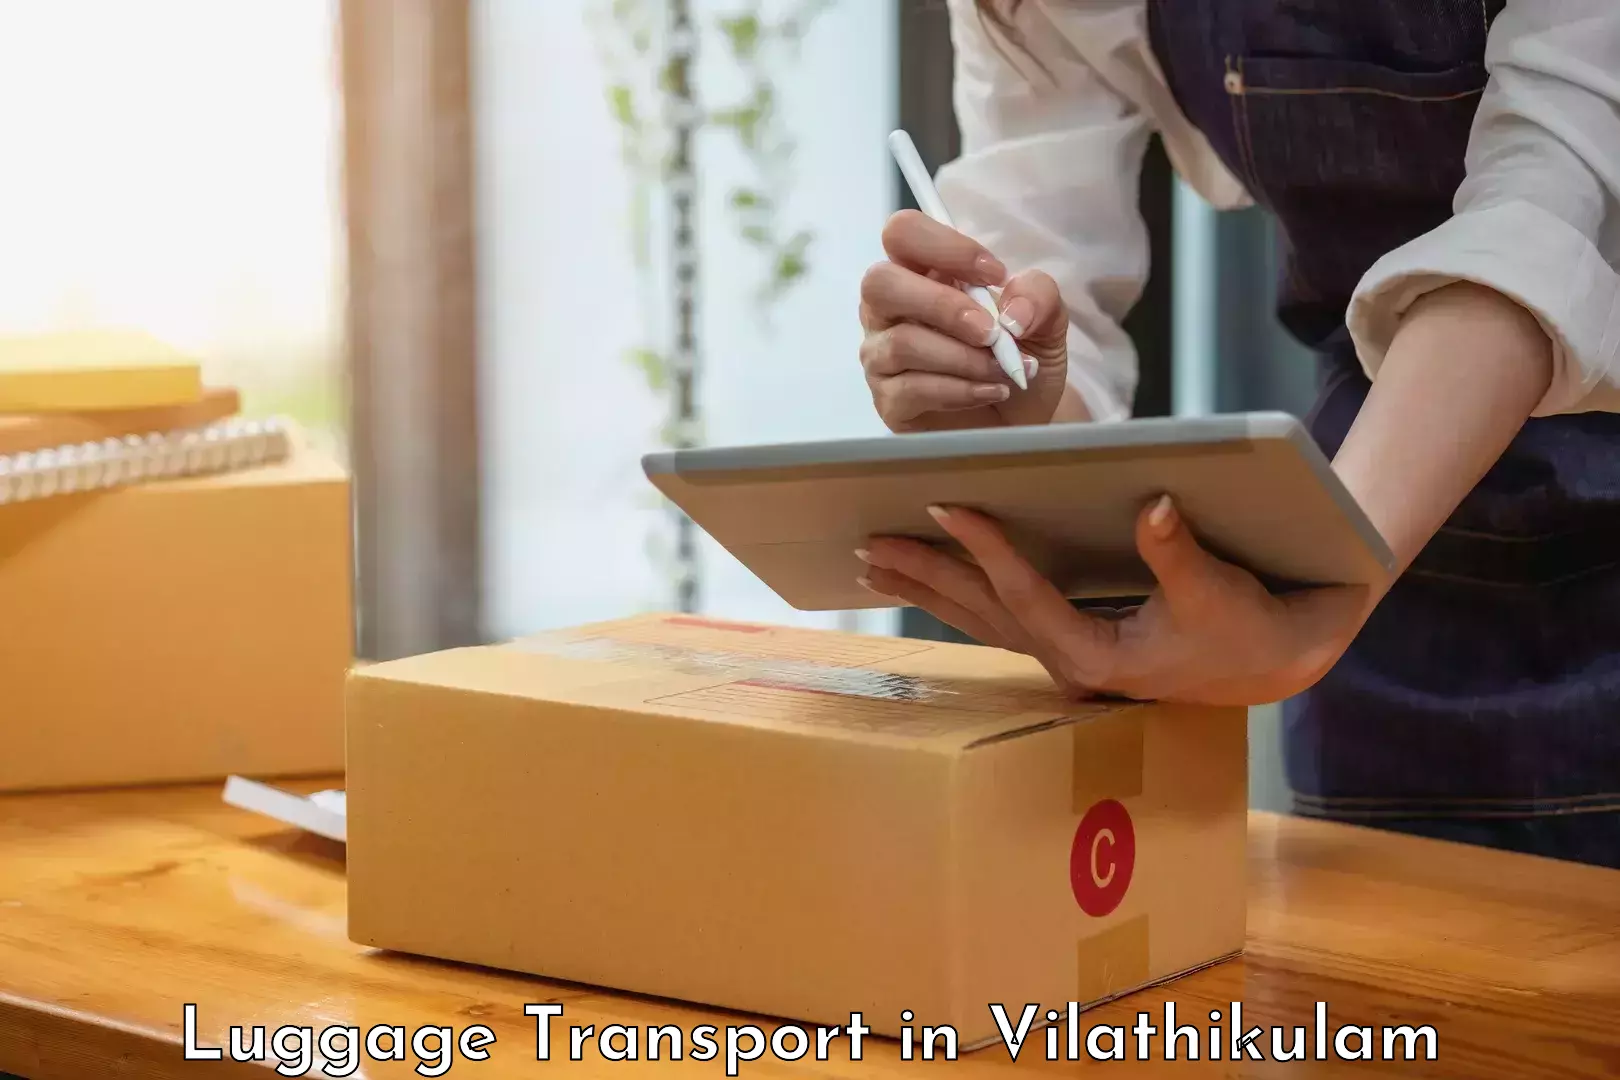 Luggage transport consulting in Vilathikulam